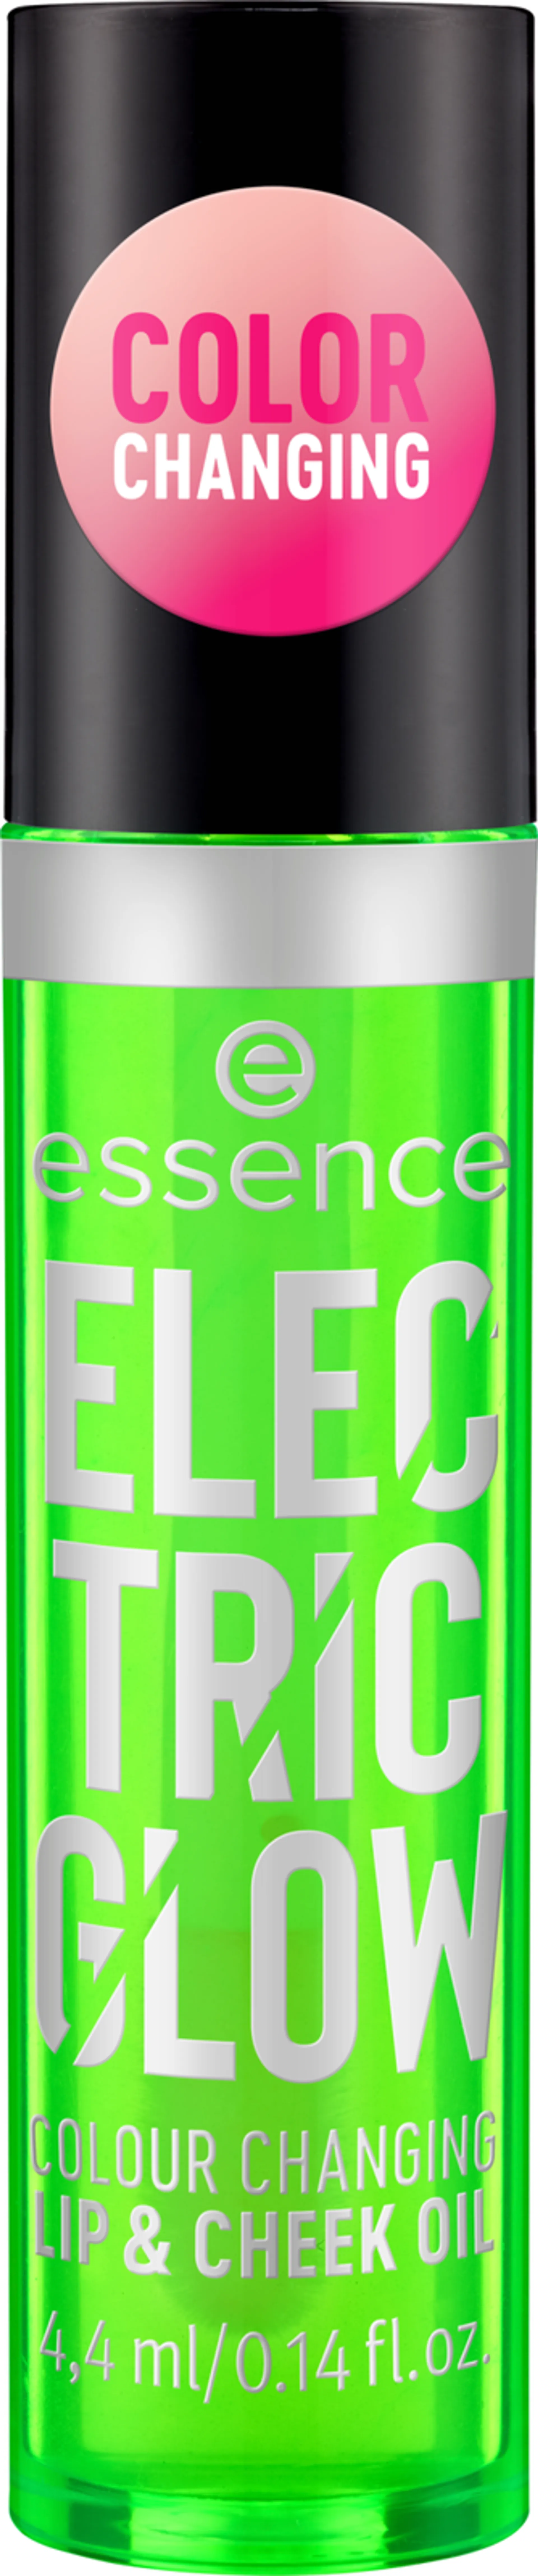 essence ELECTRIC GLOW COLOUR CHANGING LIP & CHEEK OIL väriä vaihtava huuli- ja poskiöljy 4,4 ml - 2